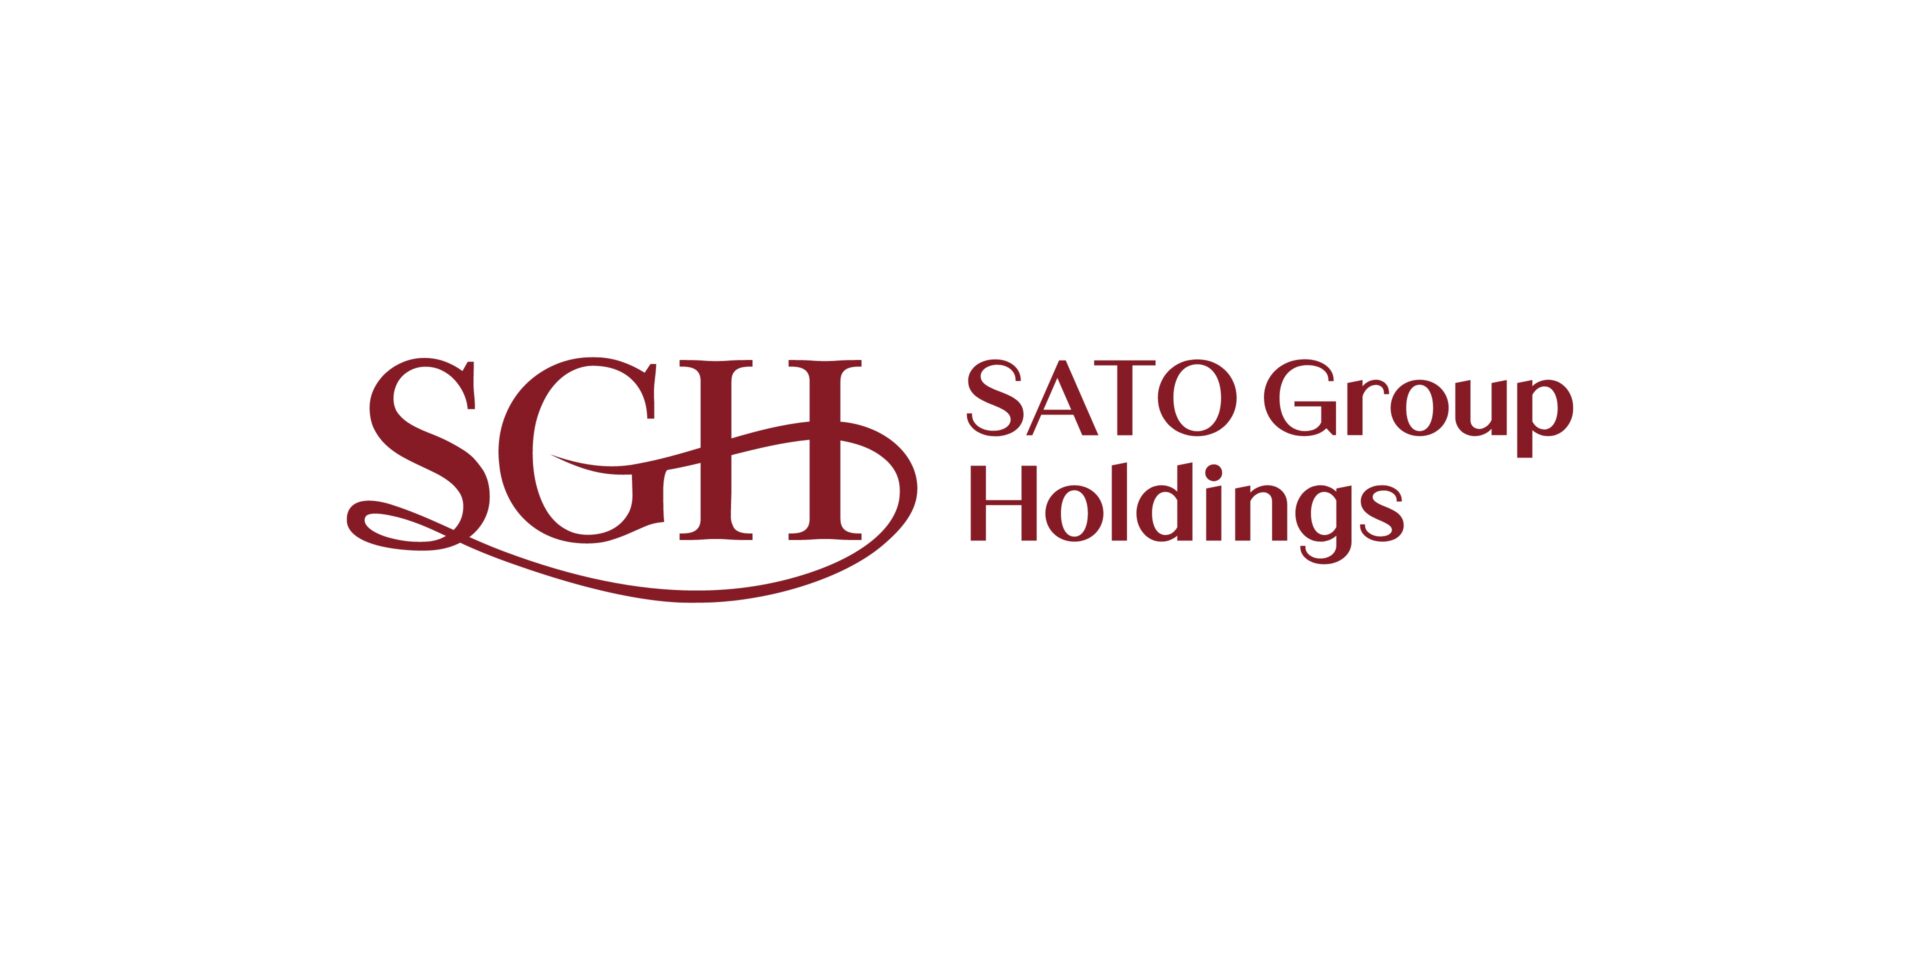 SATO Group Holdings